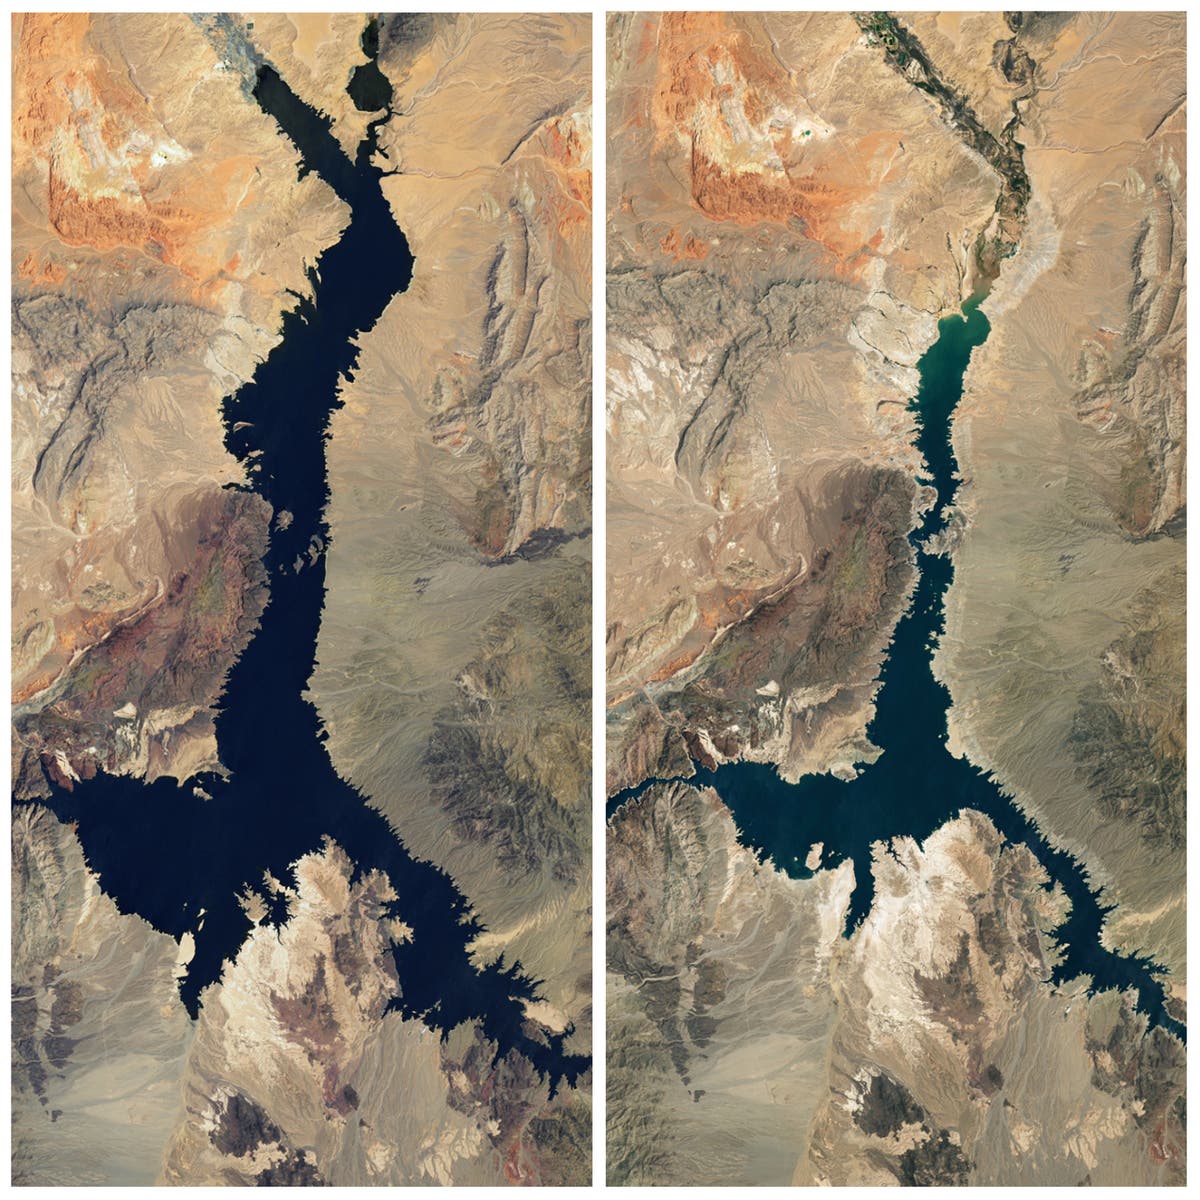 More human remains surface at shrinking Lake Mead